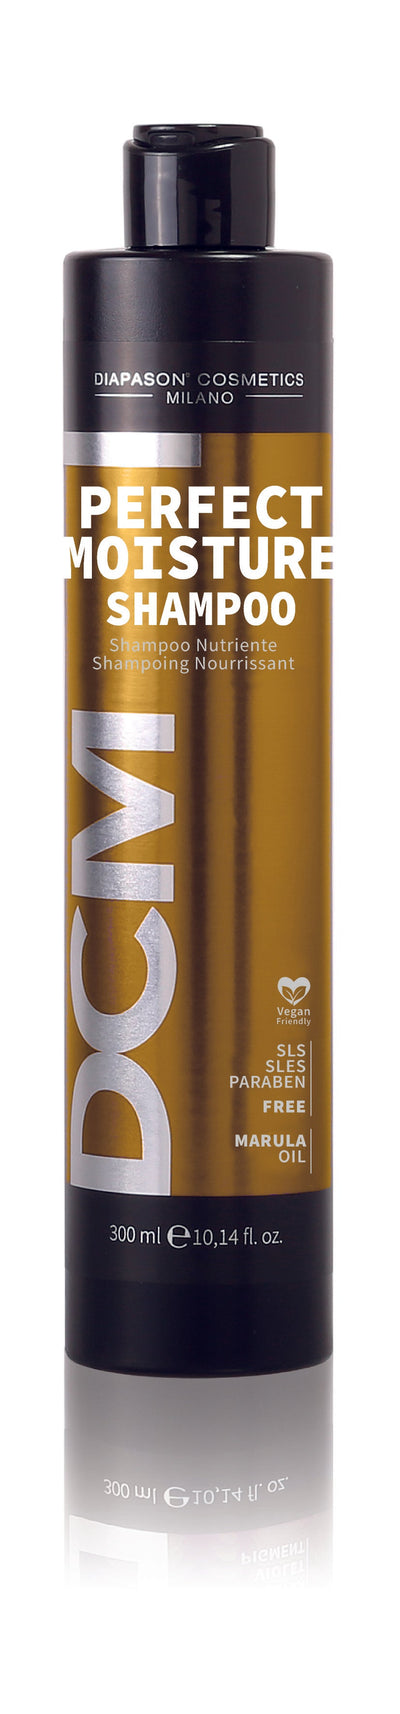 DCM šampūnas - maitinantis - visiems plaukų tipams